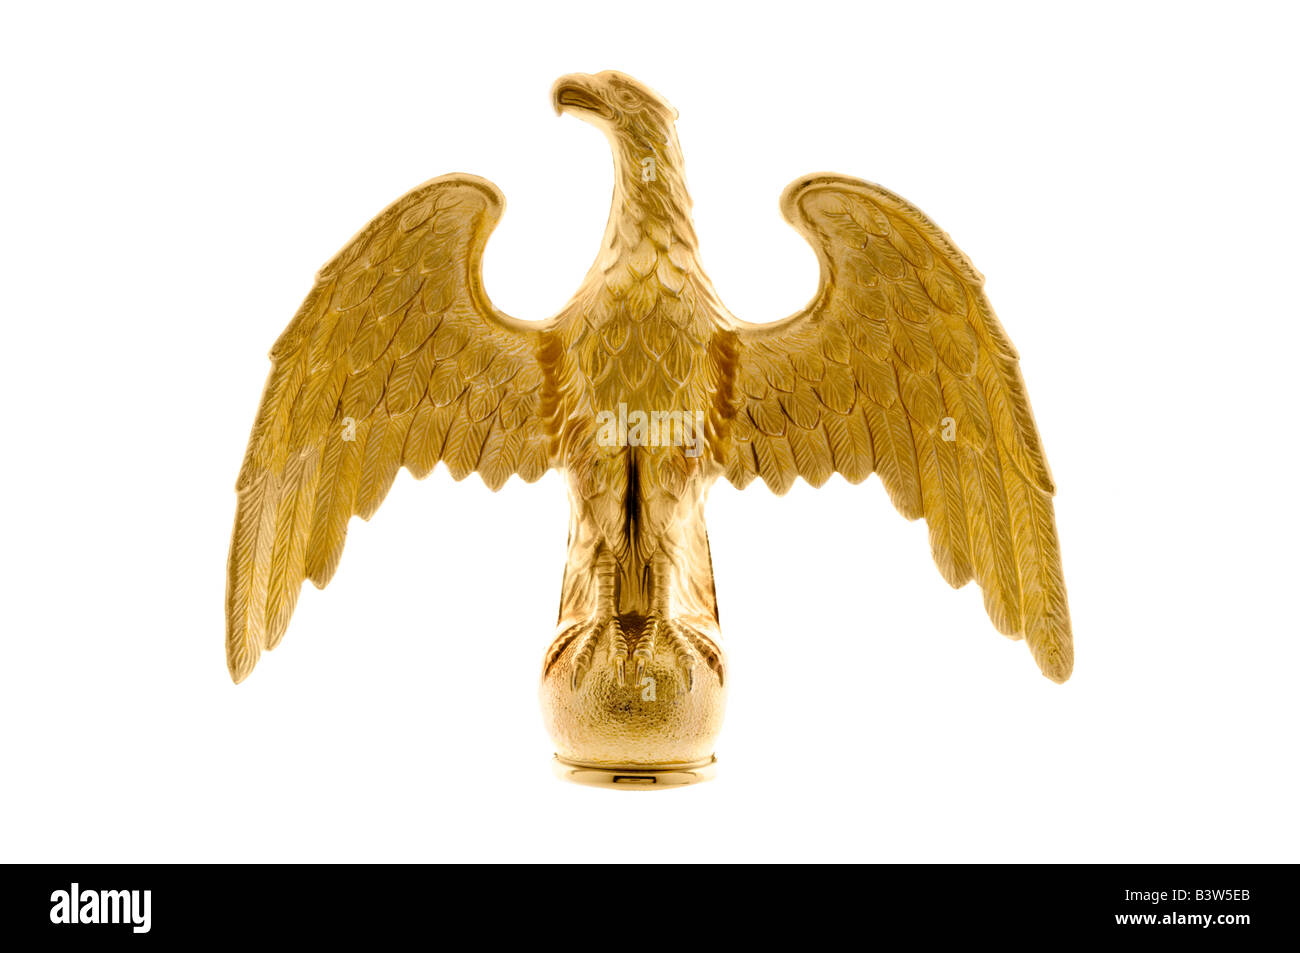 Gold American eagle flag pole ornament Stock Photo